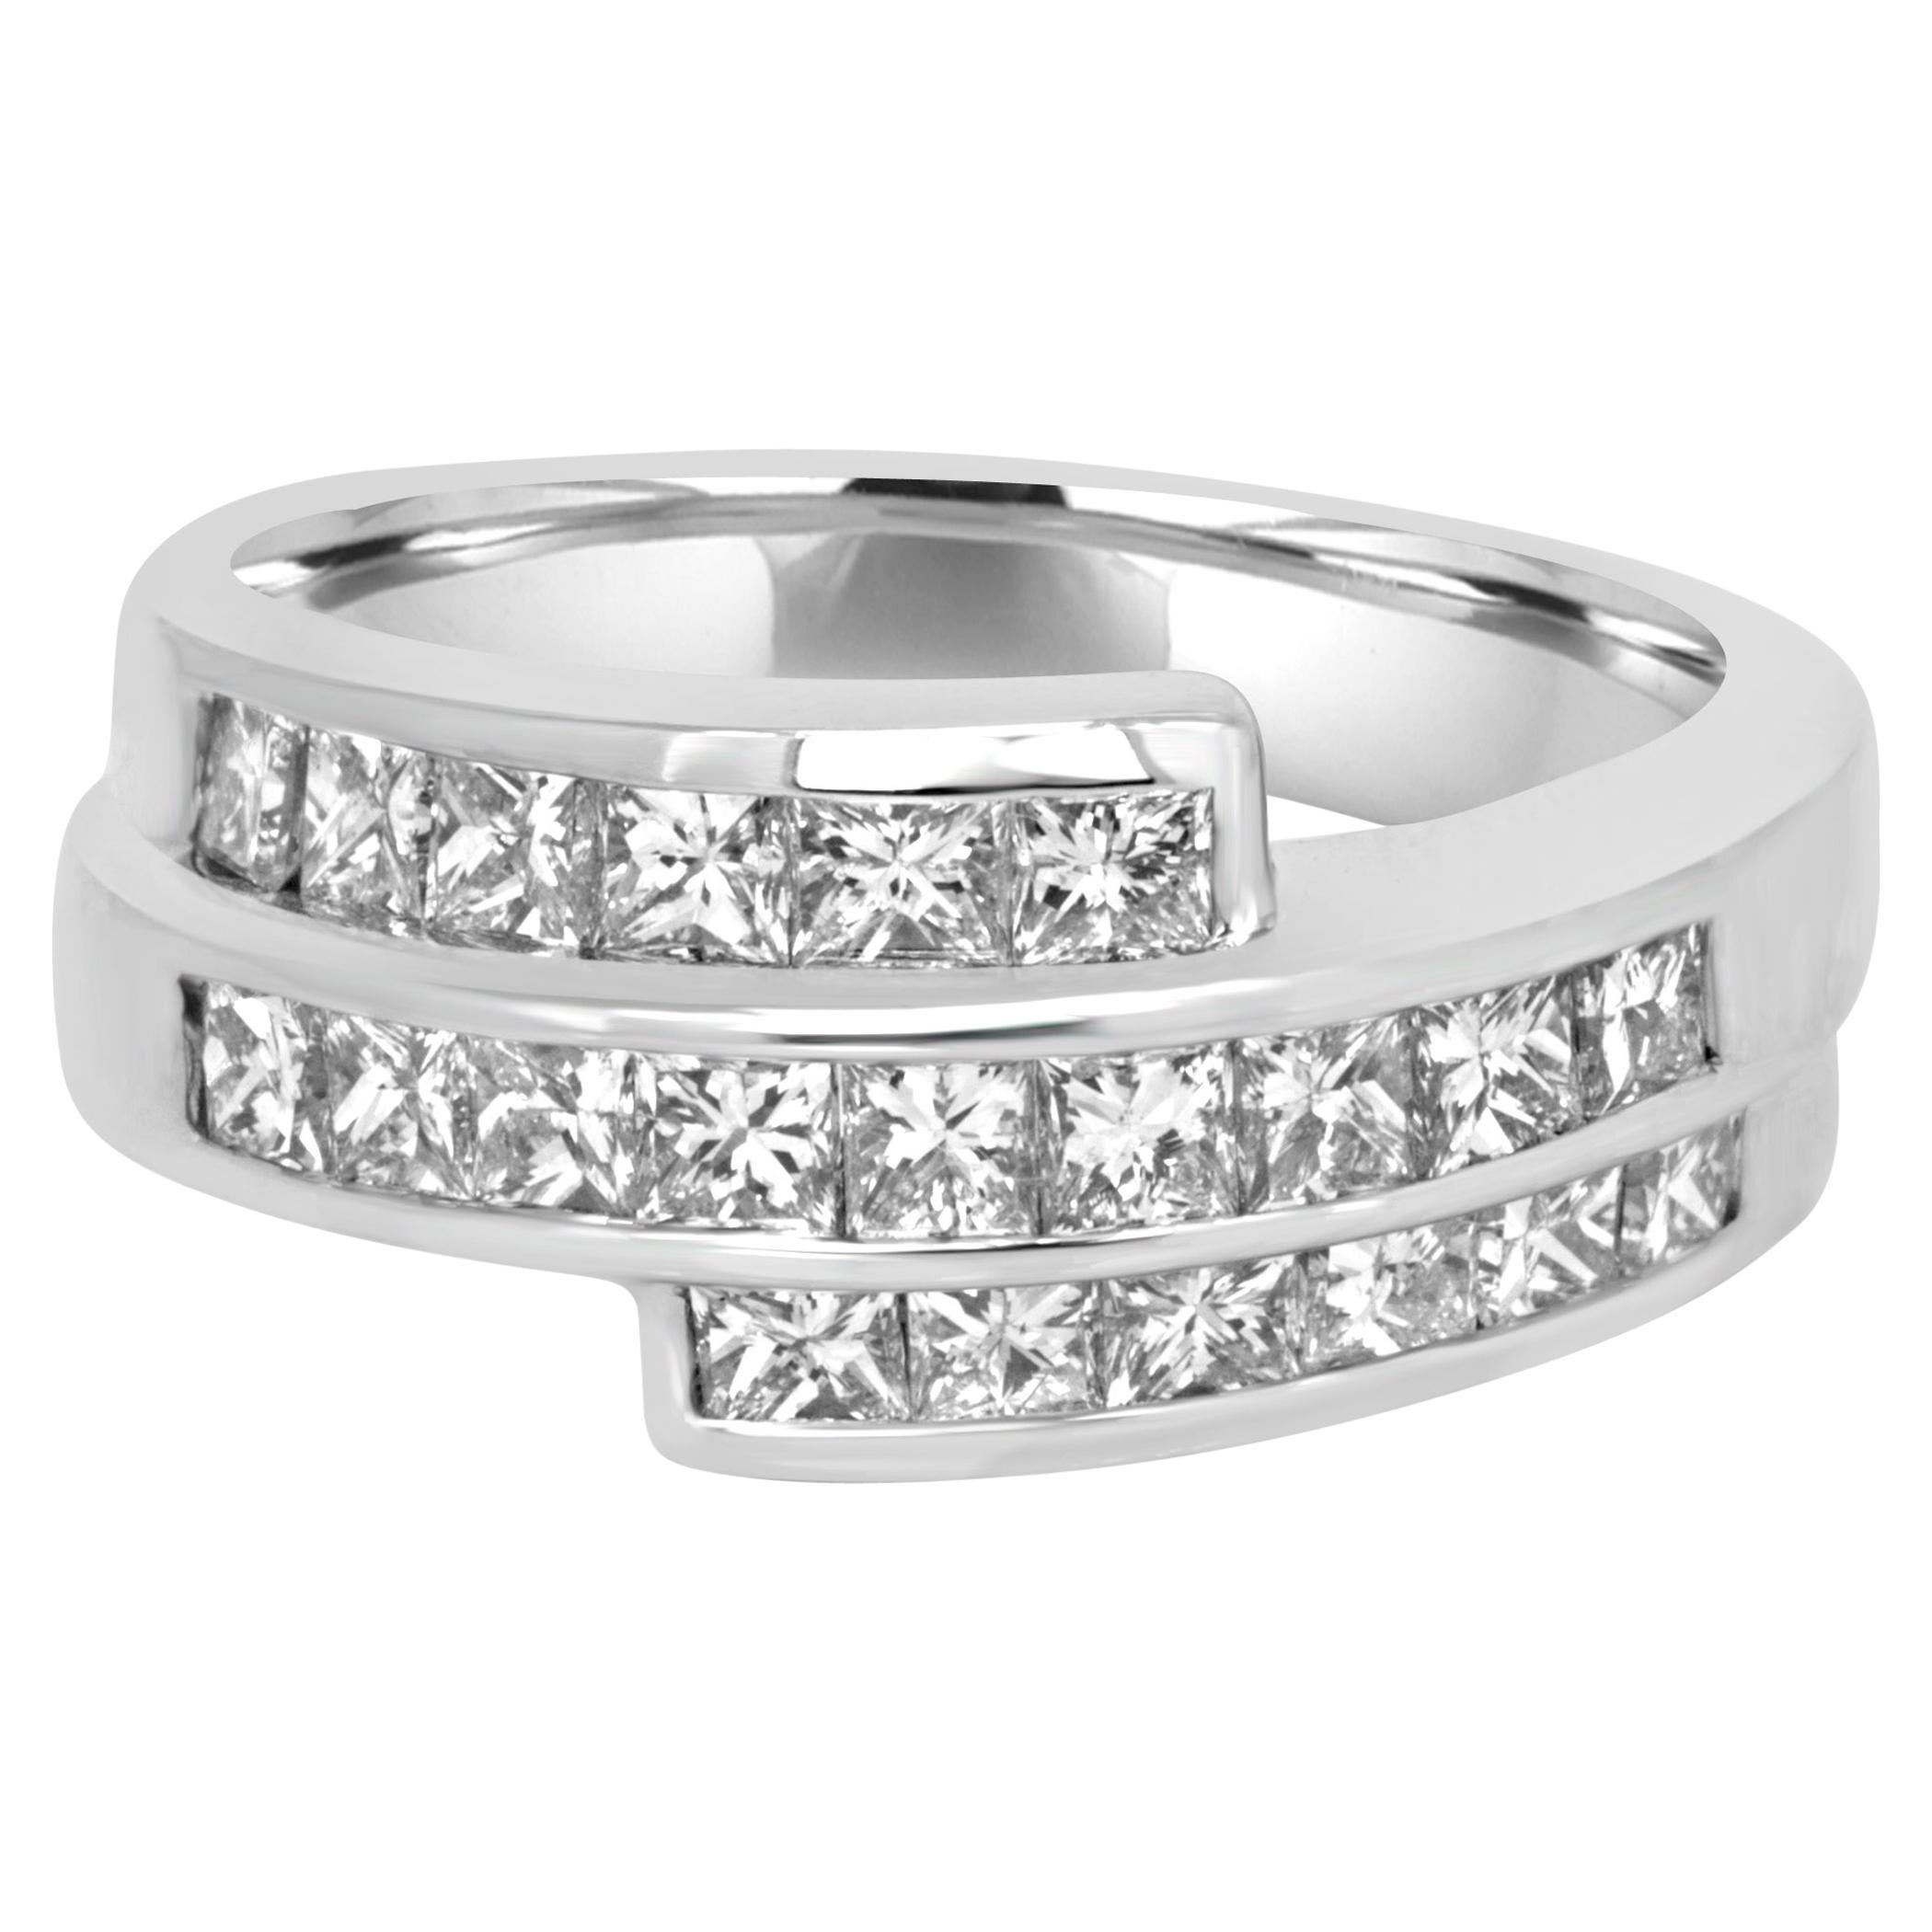 1.45 Carat Princess Cut Diamond Three-Row White Gold Fashion Cocktail Band Ring